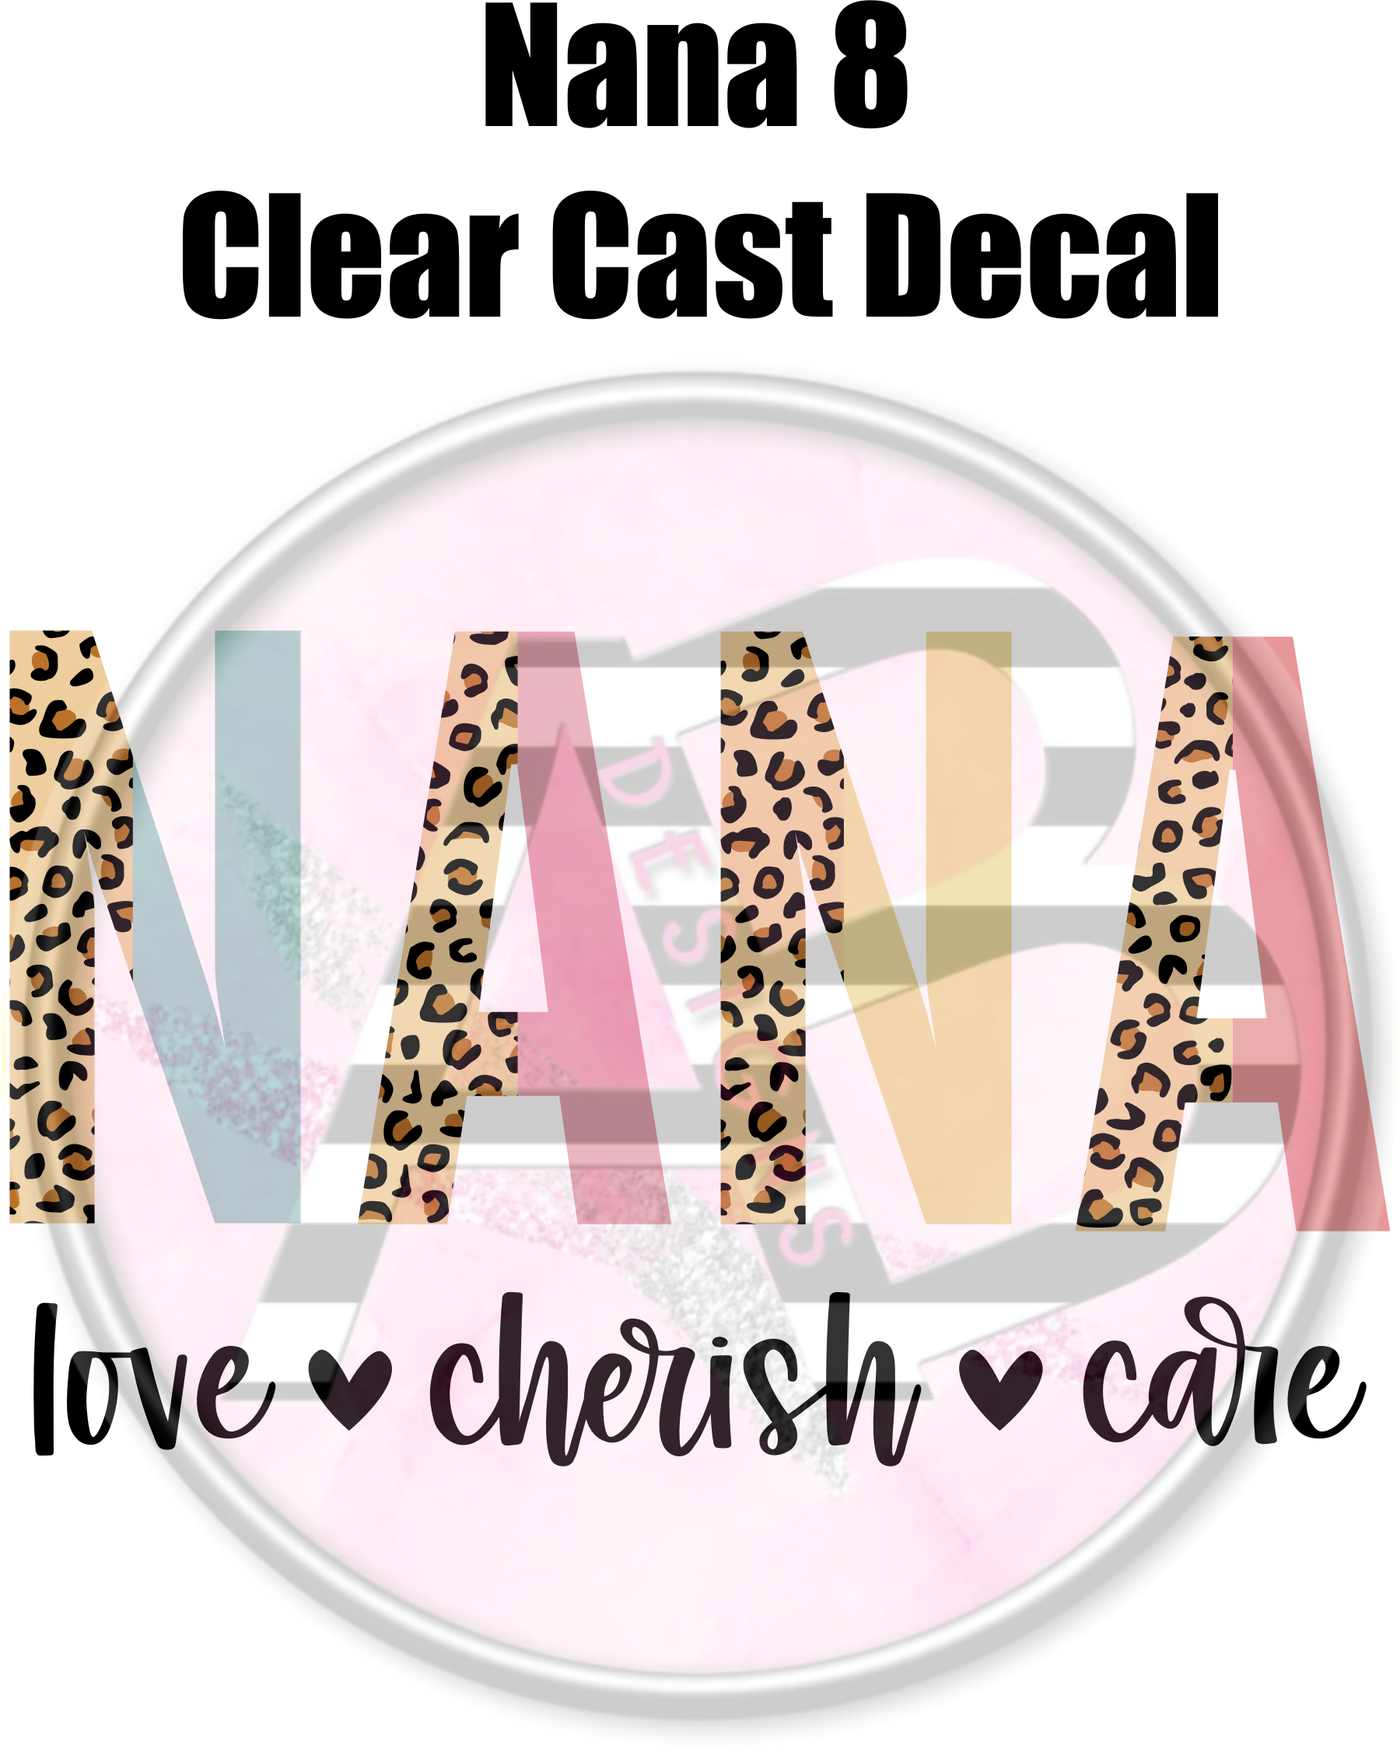 Nana 8 - Clear Cast Decal